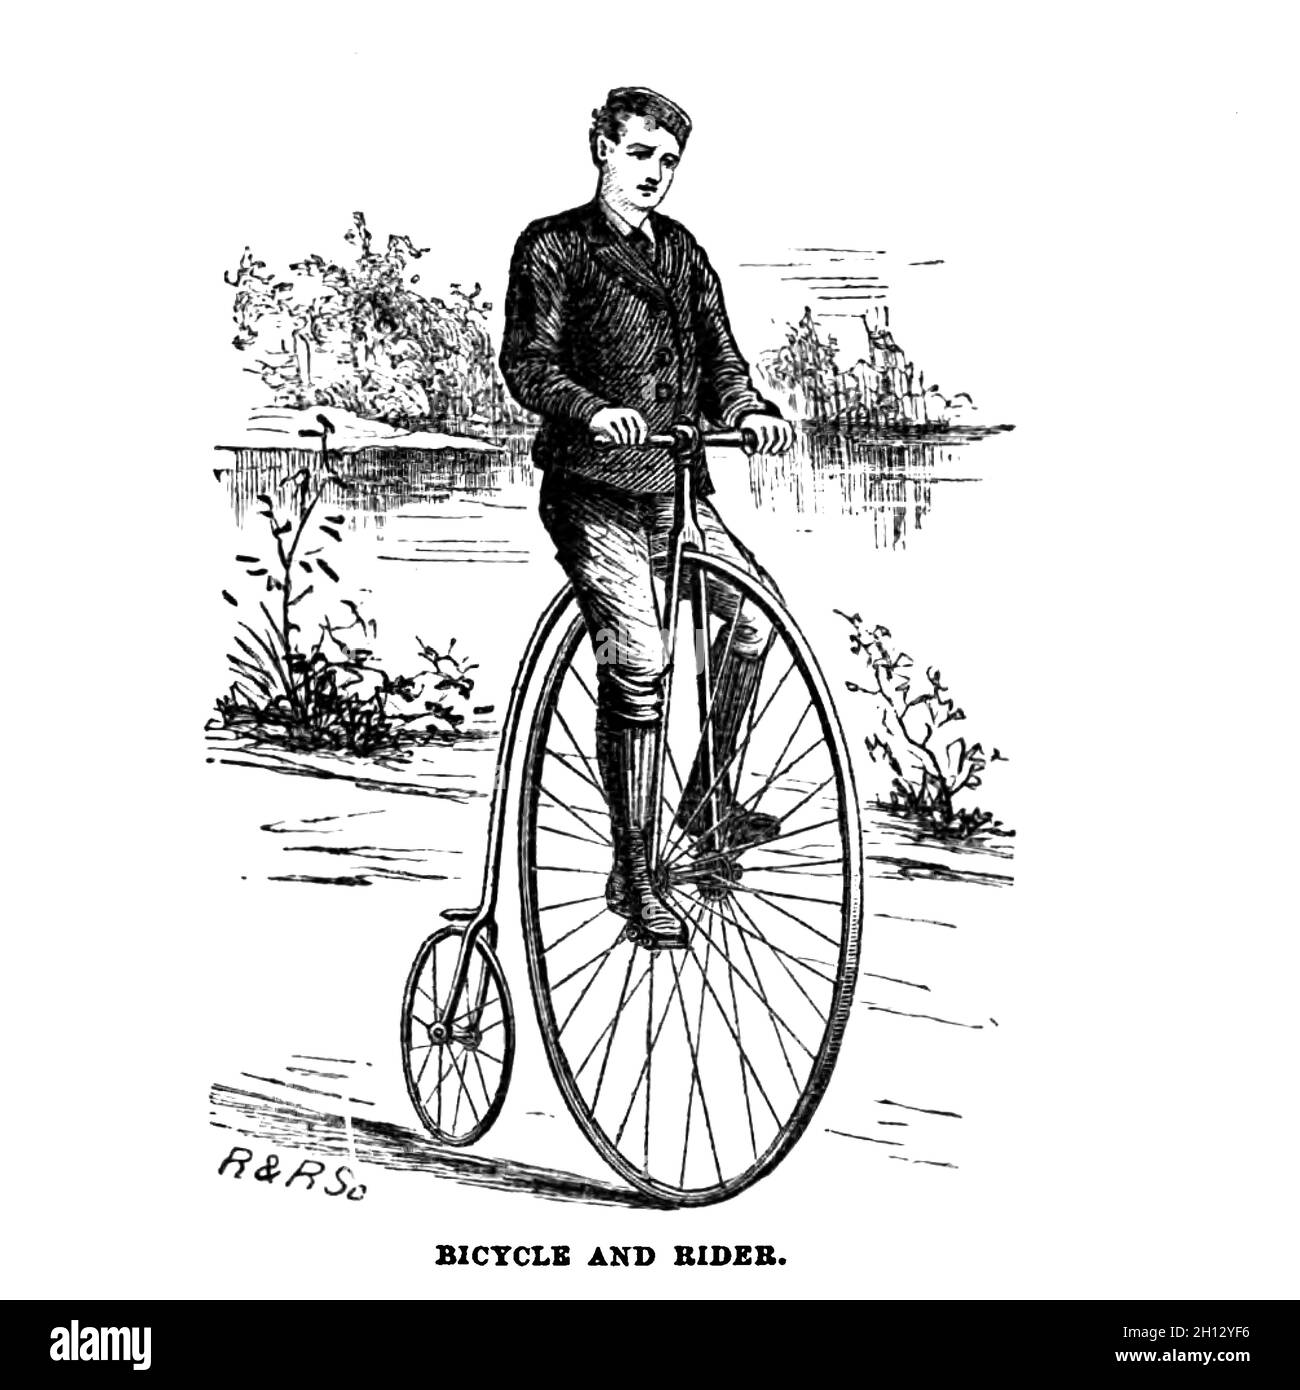 Man riding penny-farthing, 19th century illustration Stock Photo